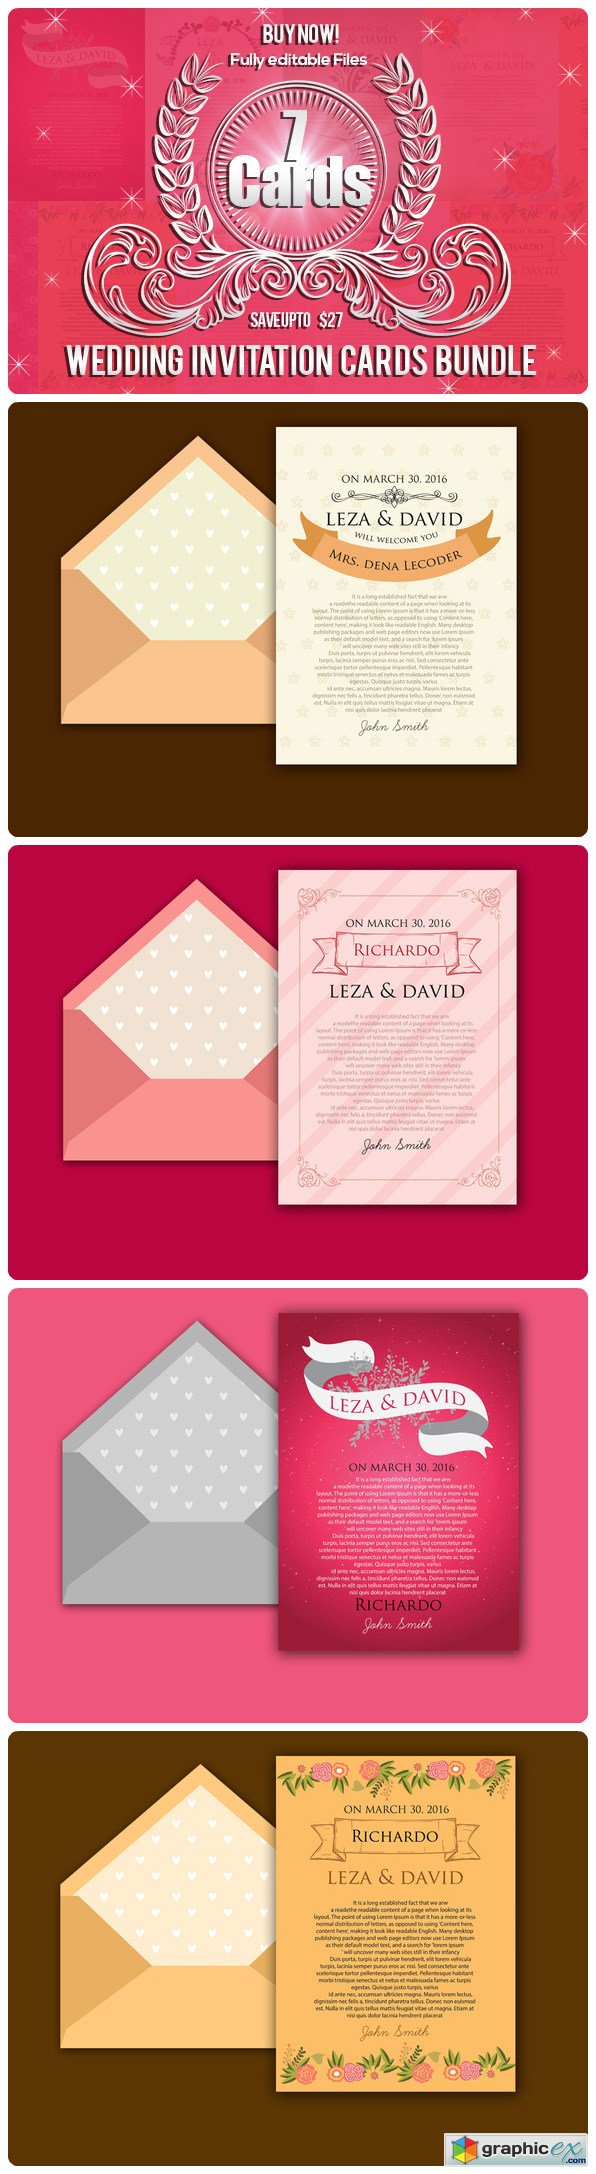 7 Wedding Invitation Cards Bundle